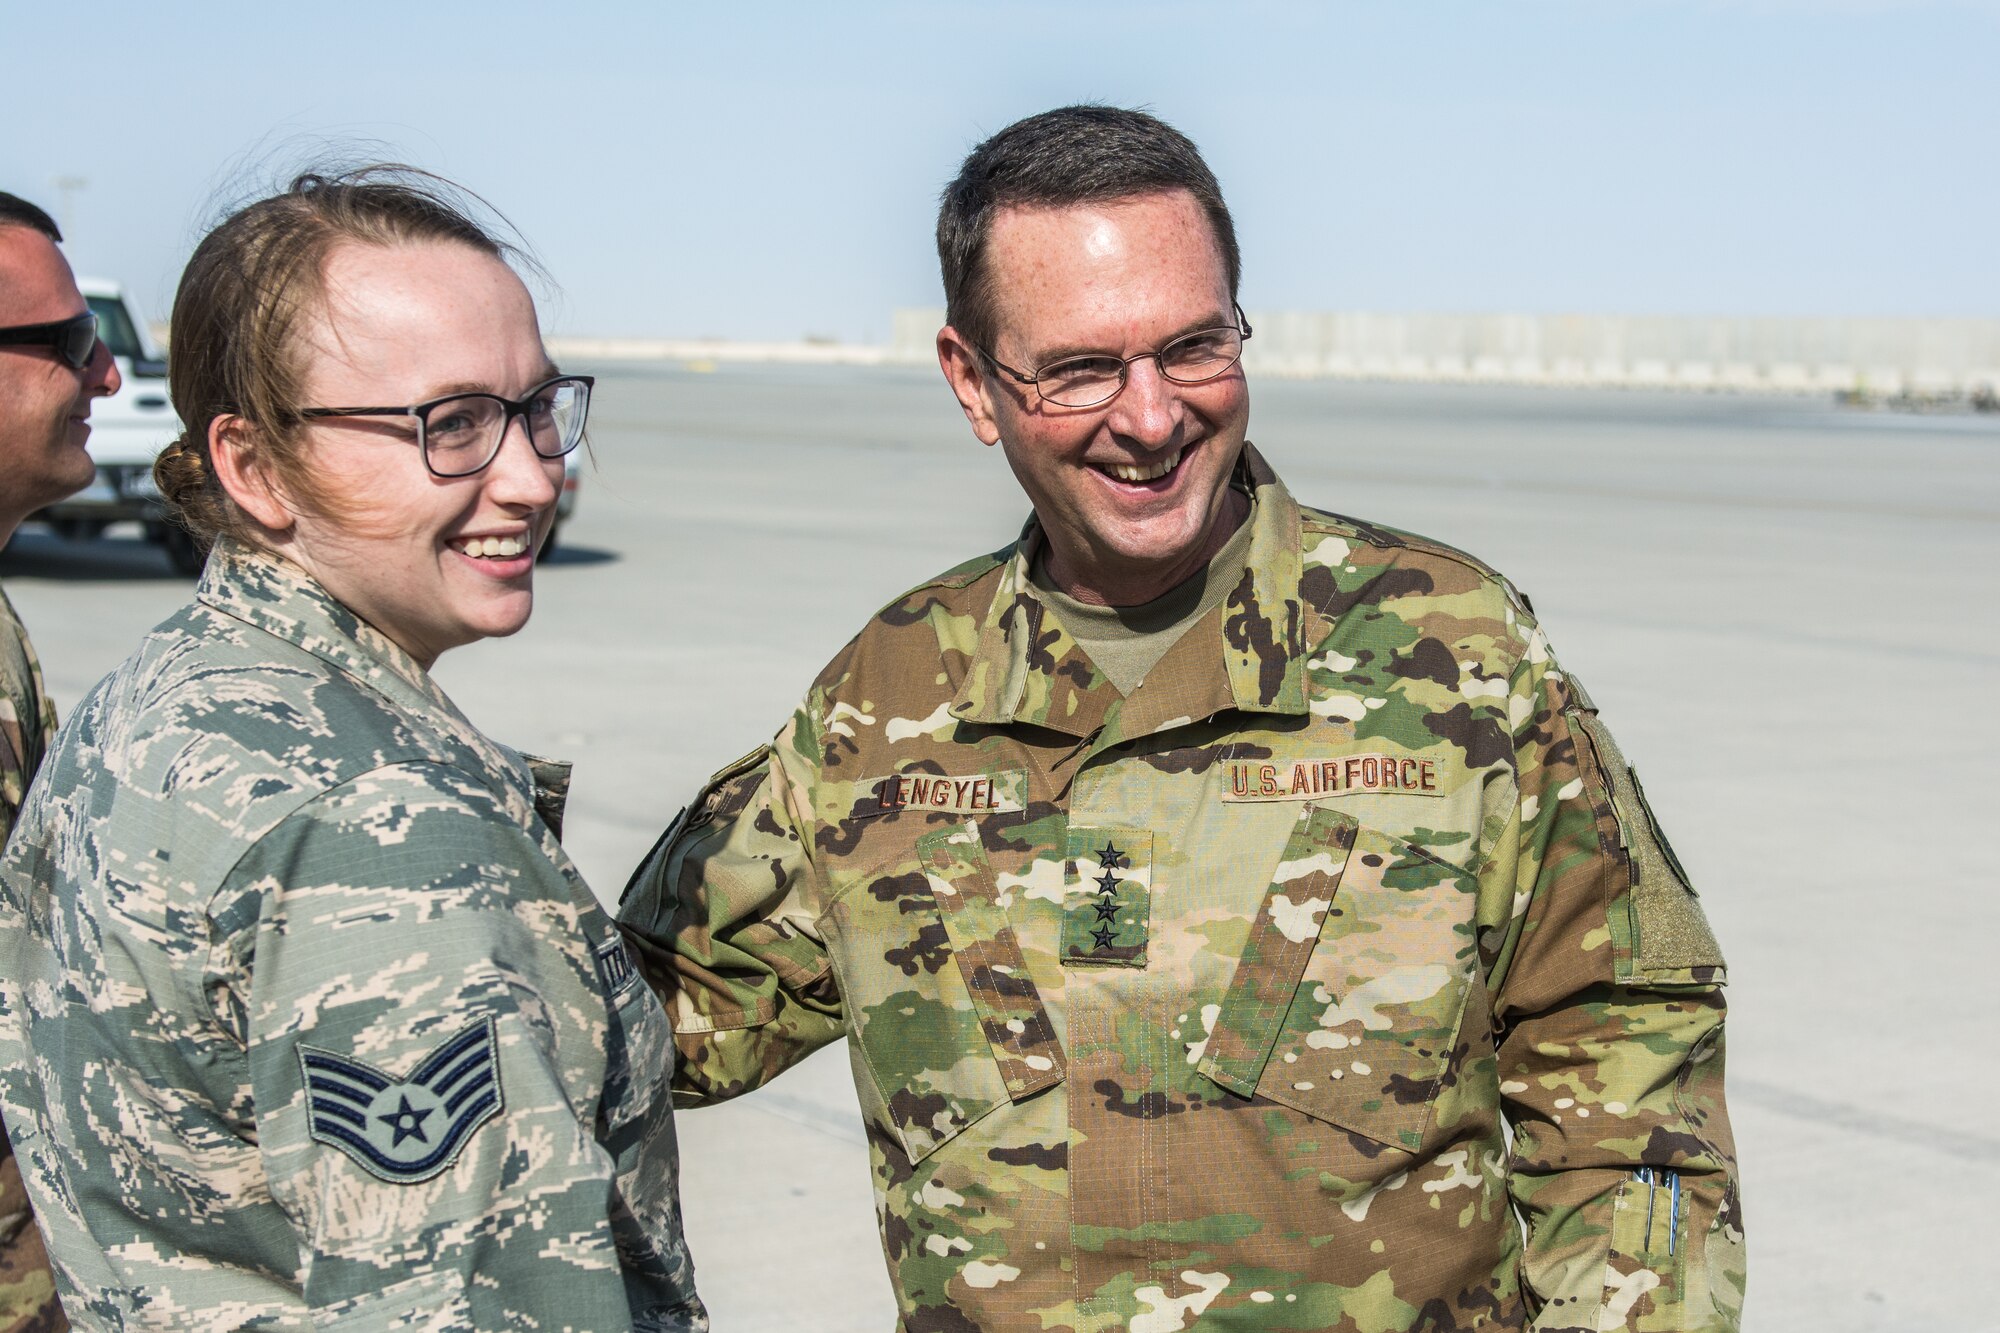 Gen. Lengyel, Chief of National Guard Bureau, checks in with Guardsmen deployed to Qatar